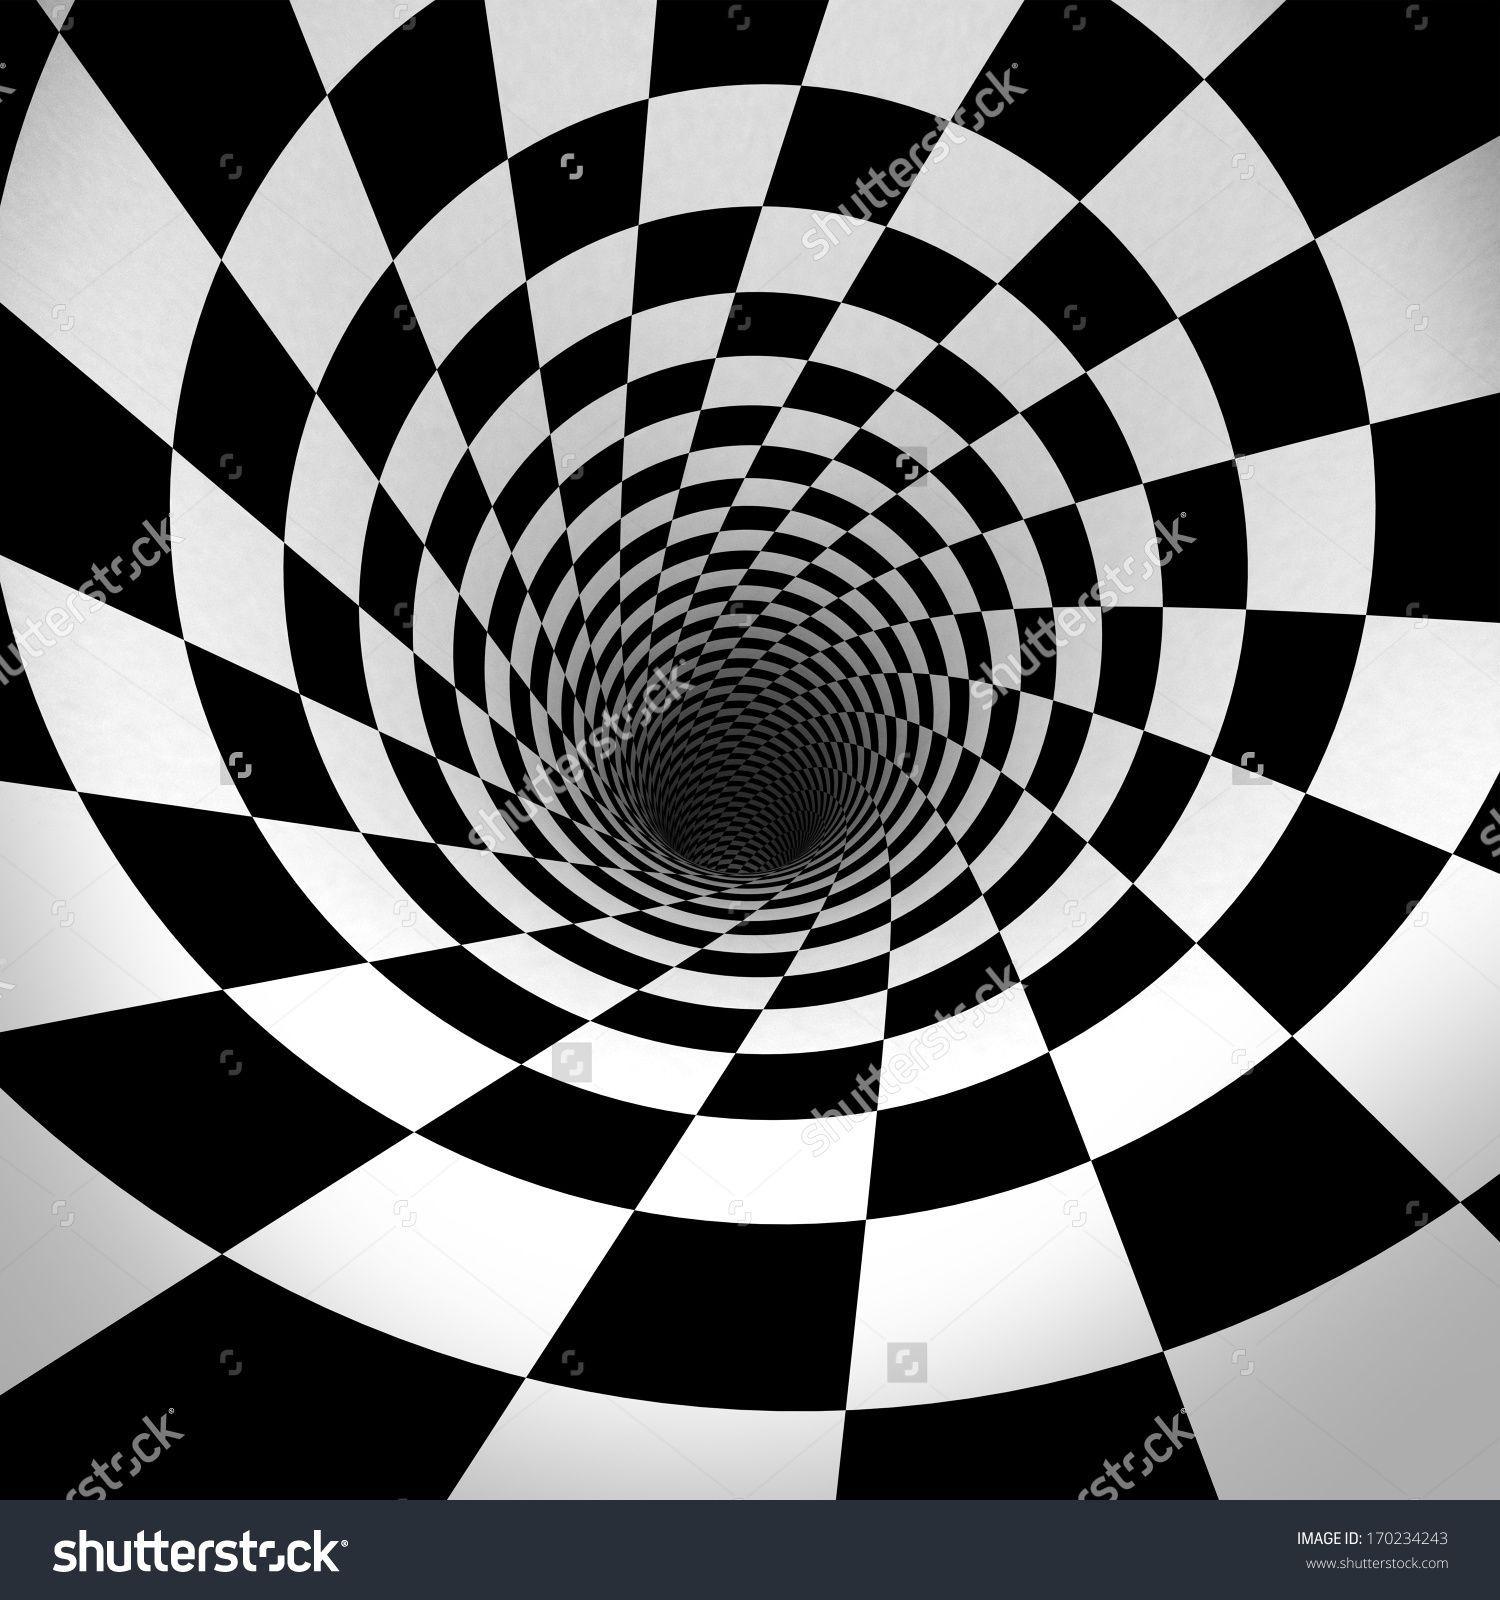 Black and White Spiral Logo - Black And White Spiral. 3D 170234243 : Shutterstock